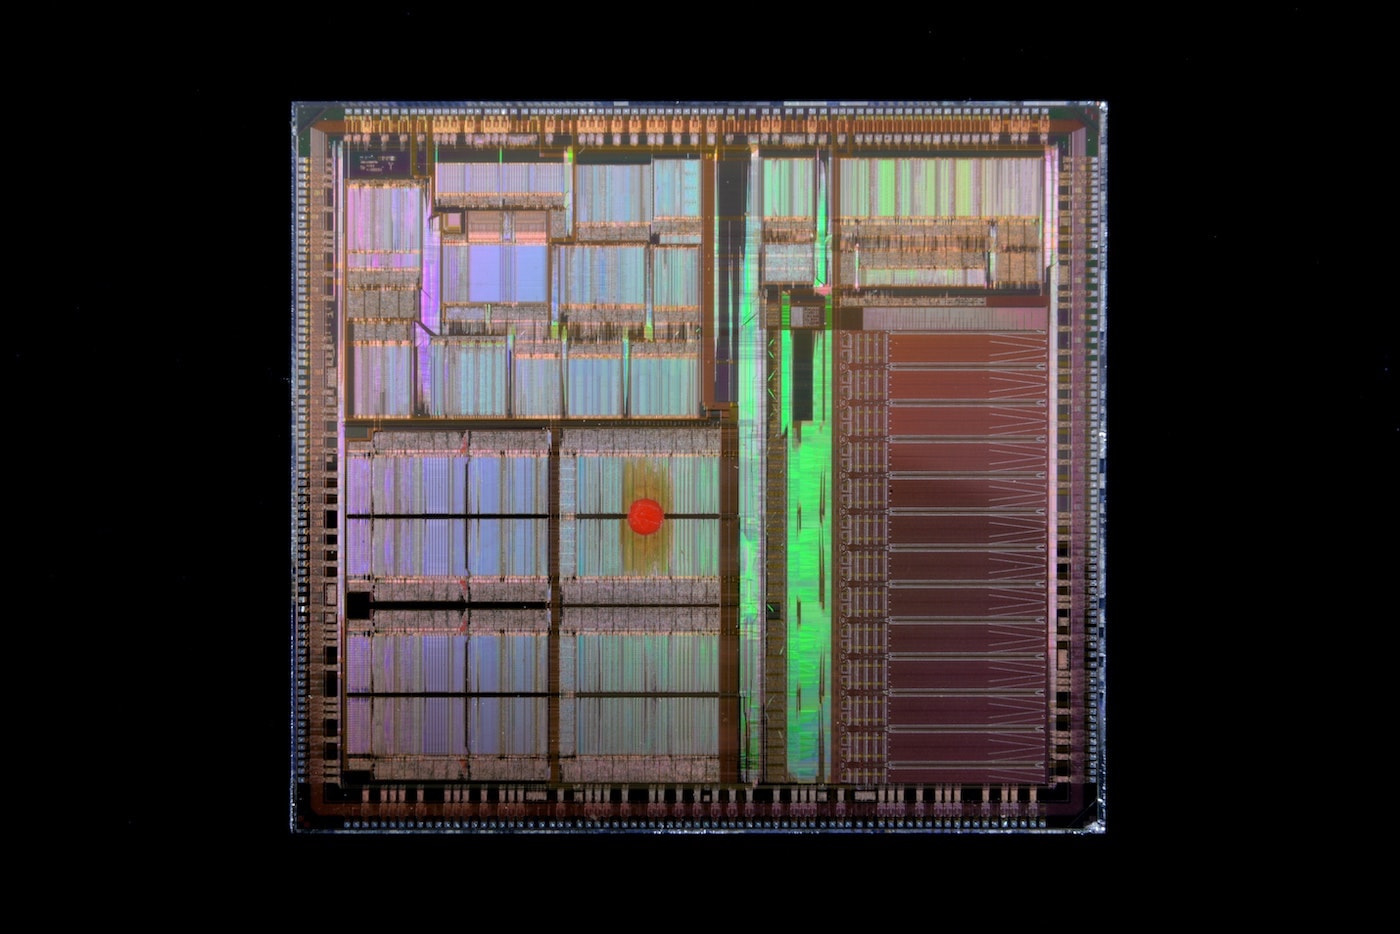 A microprocessor